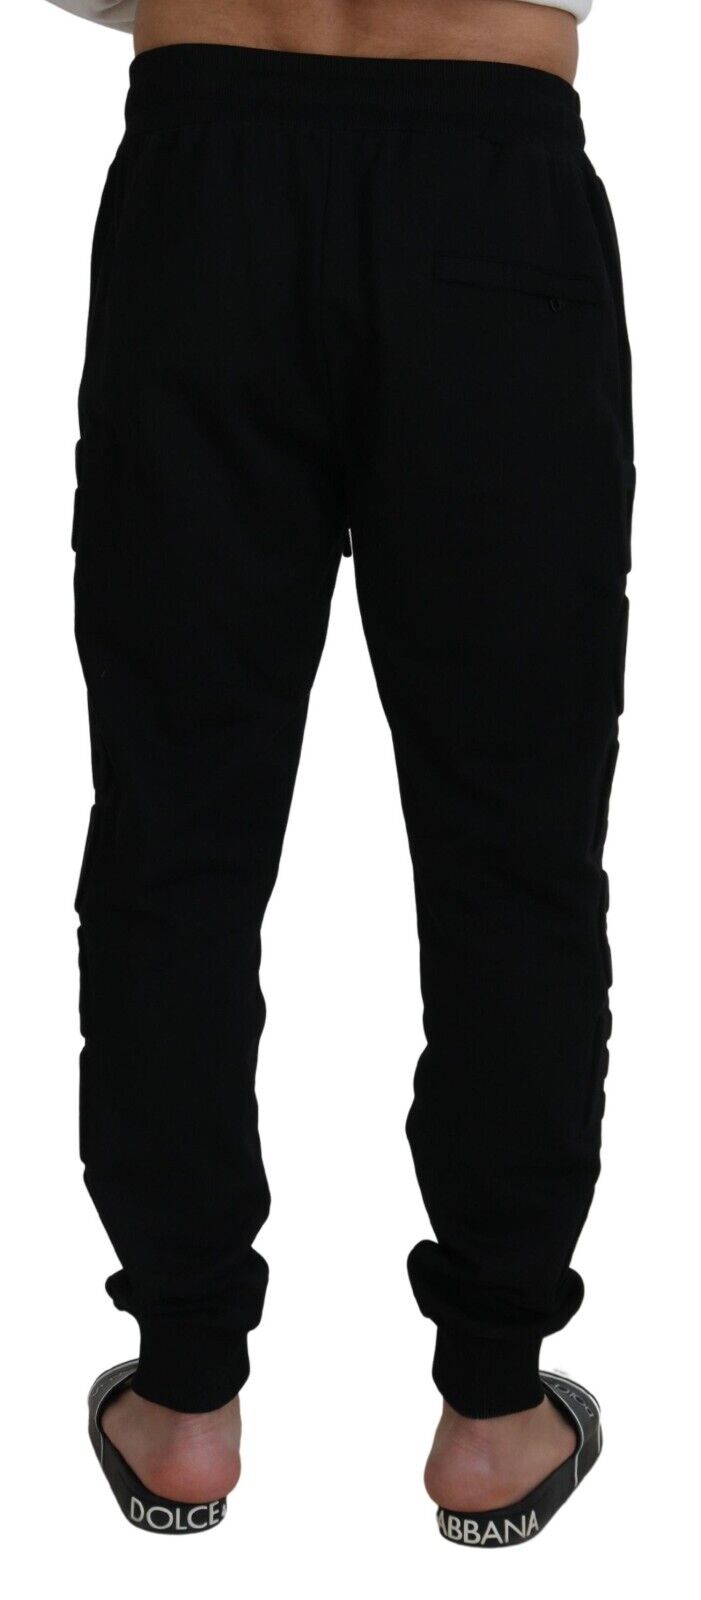 Dolce & Gabbana Black Cotton  Jogger Trousers Pants